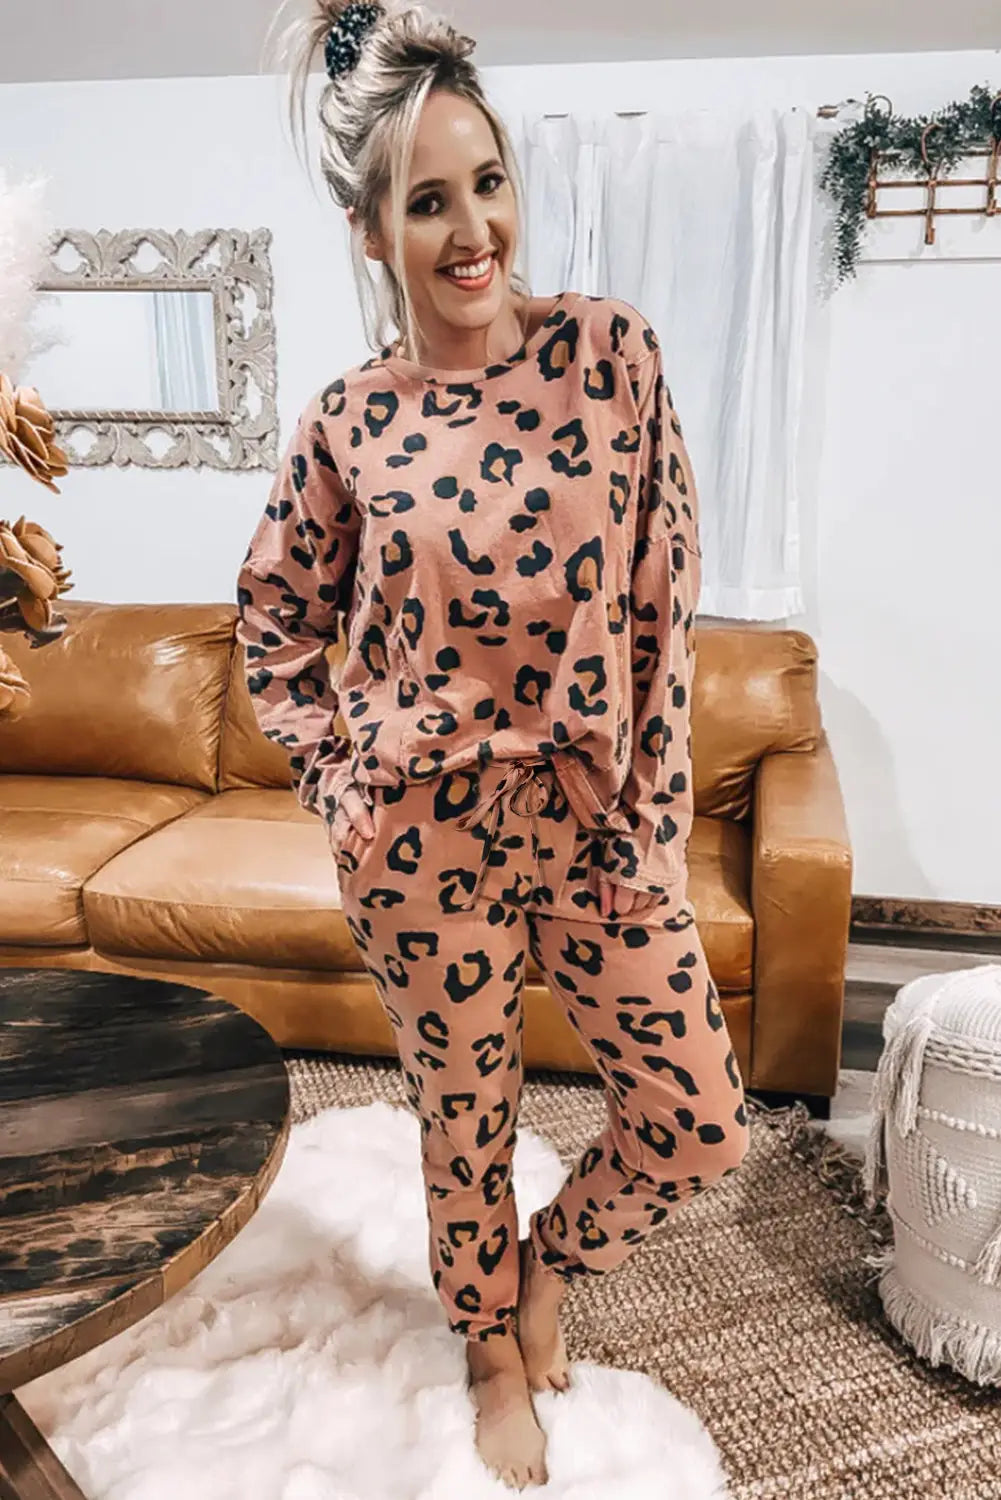 Pale chestnut leopard long sleeve top and drawstring pants set - sets